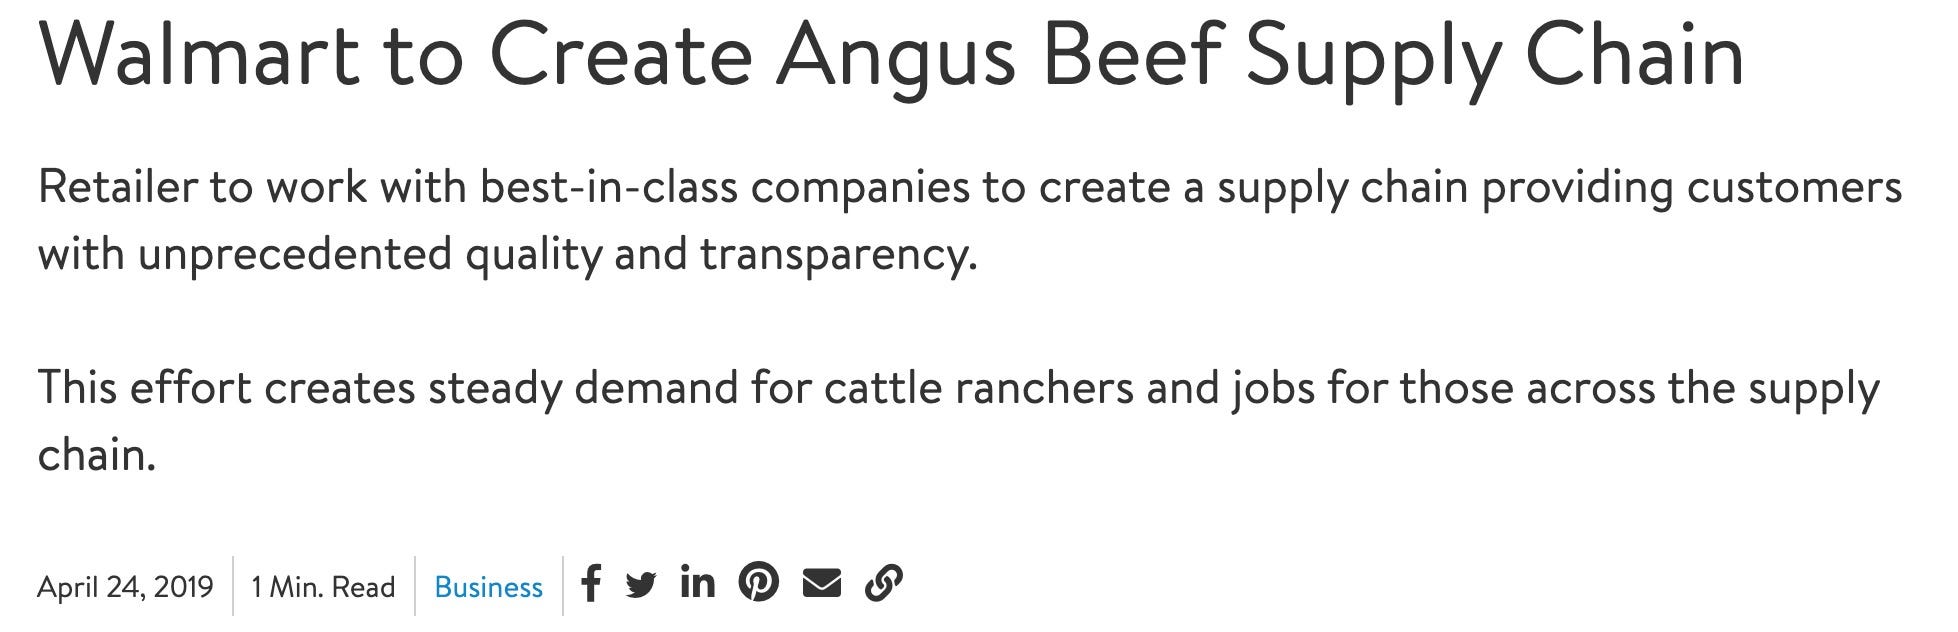 Walmart to Create Angus Beef Supply Chain